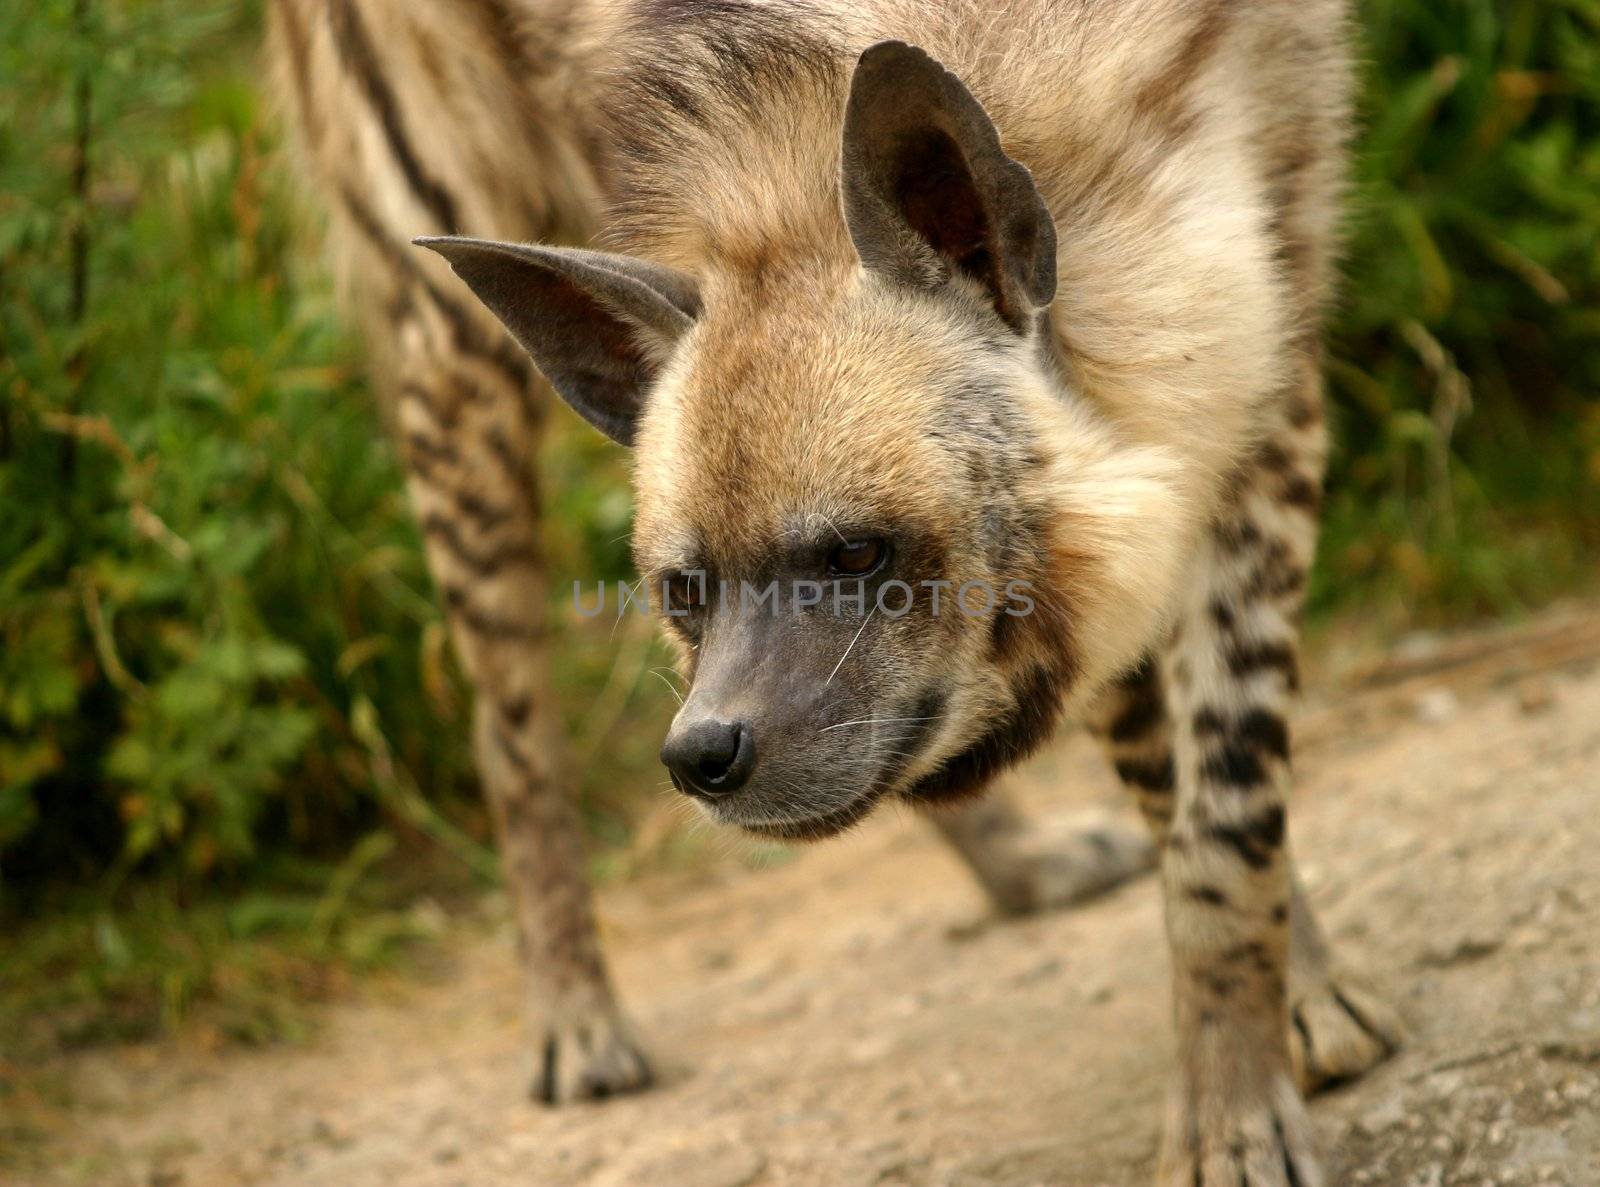 Hyena in zoo